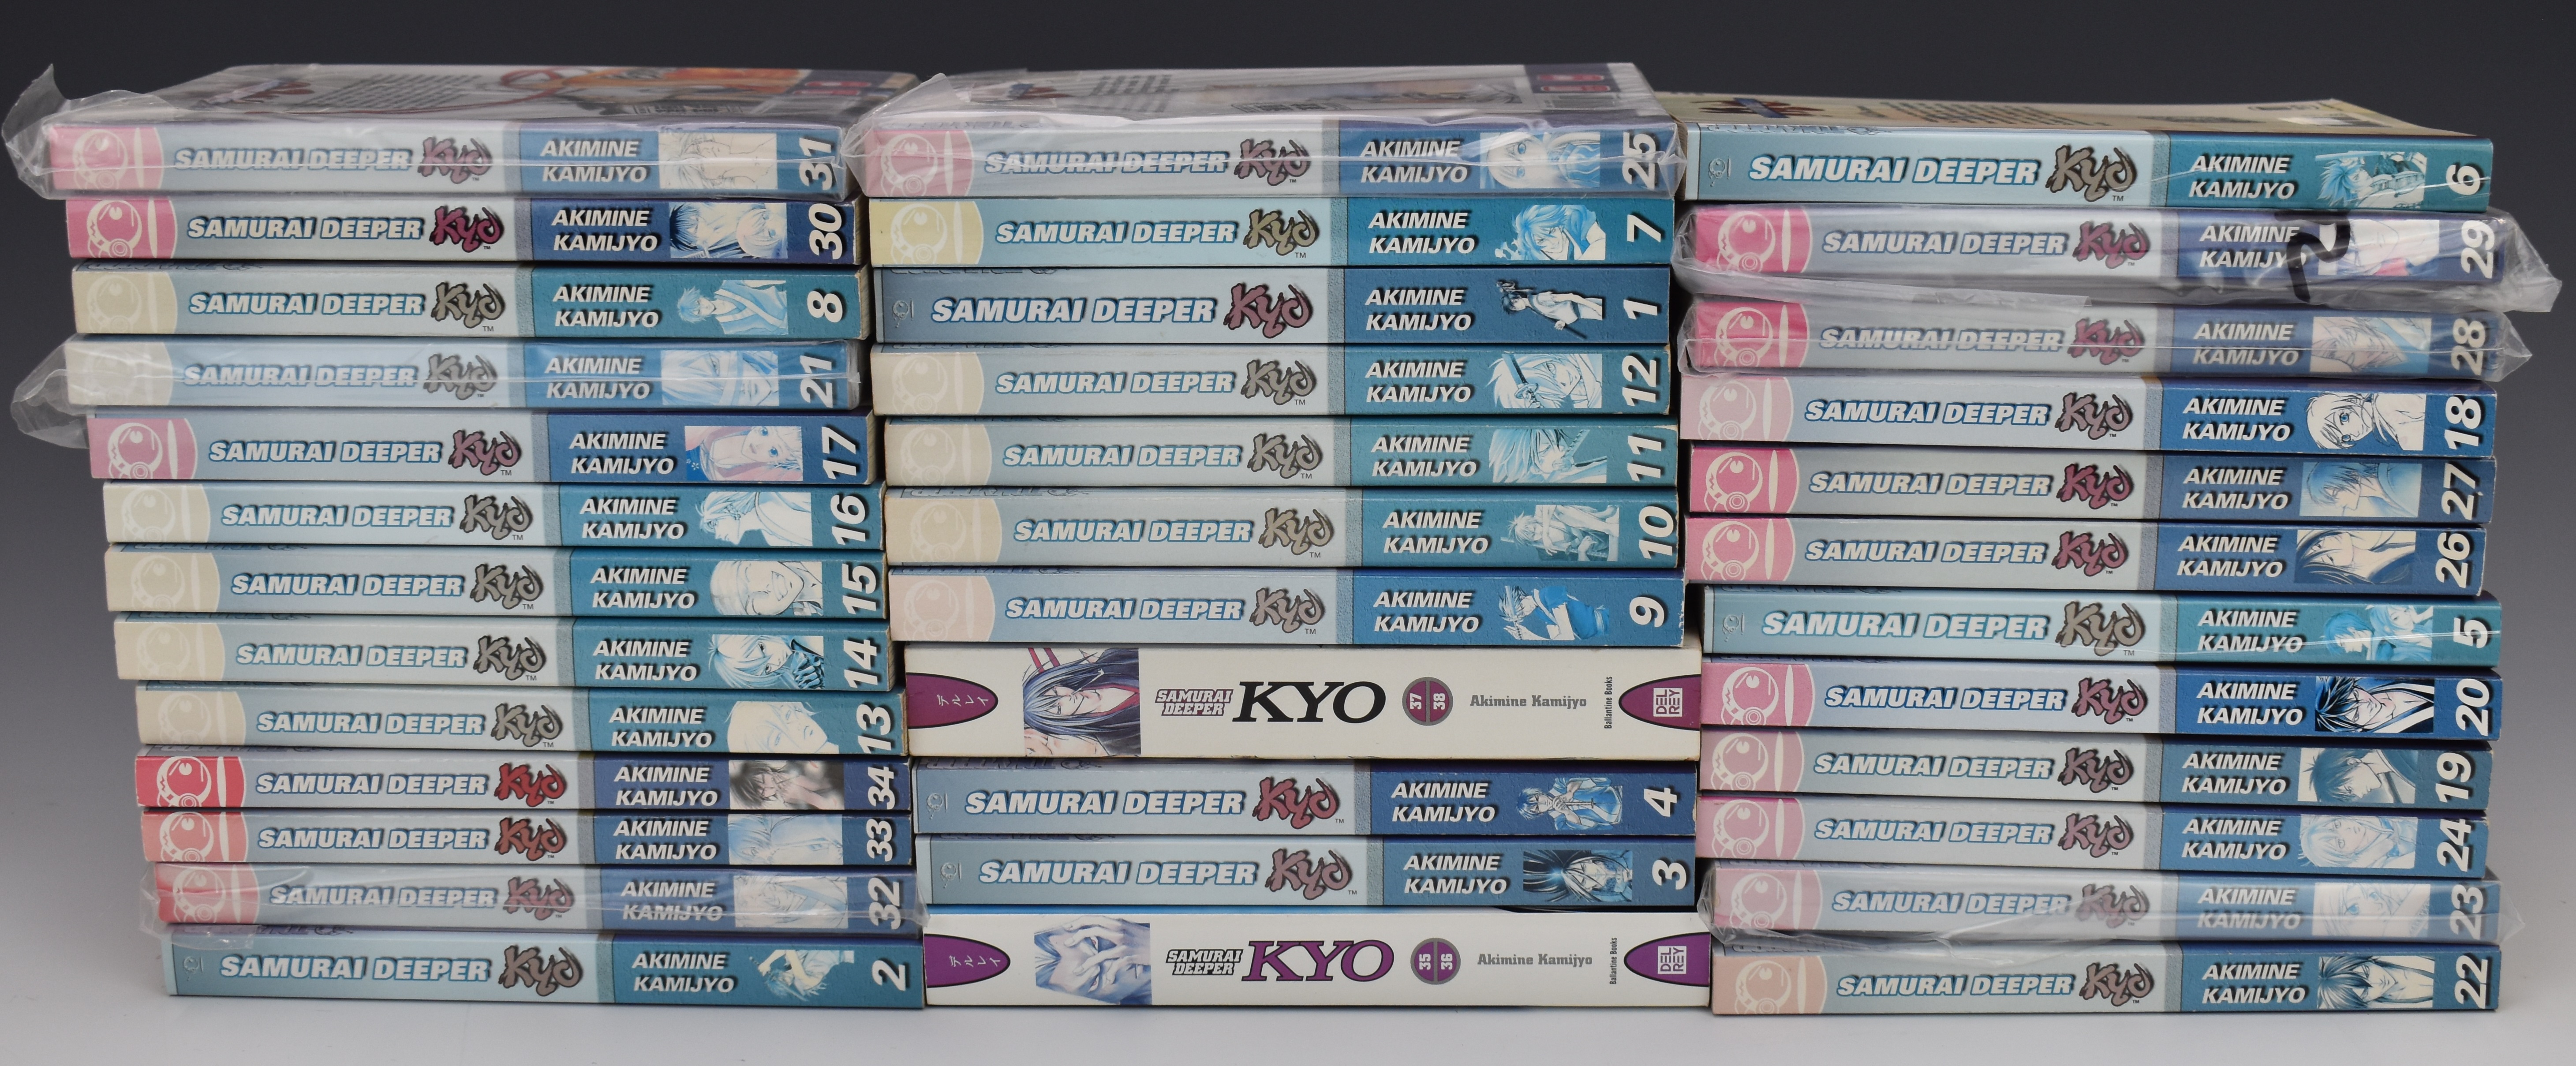 Samurai Deeper Kyo Manga comic book volumes 1-38 by Akimine Kamijyo published by Del Rey.